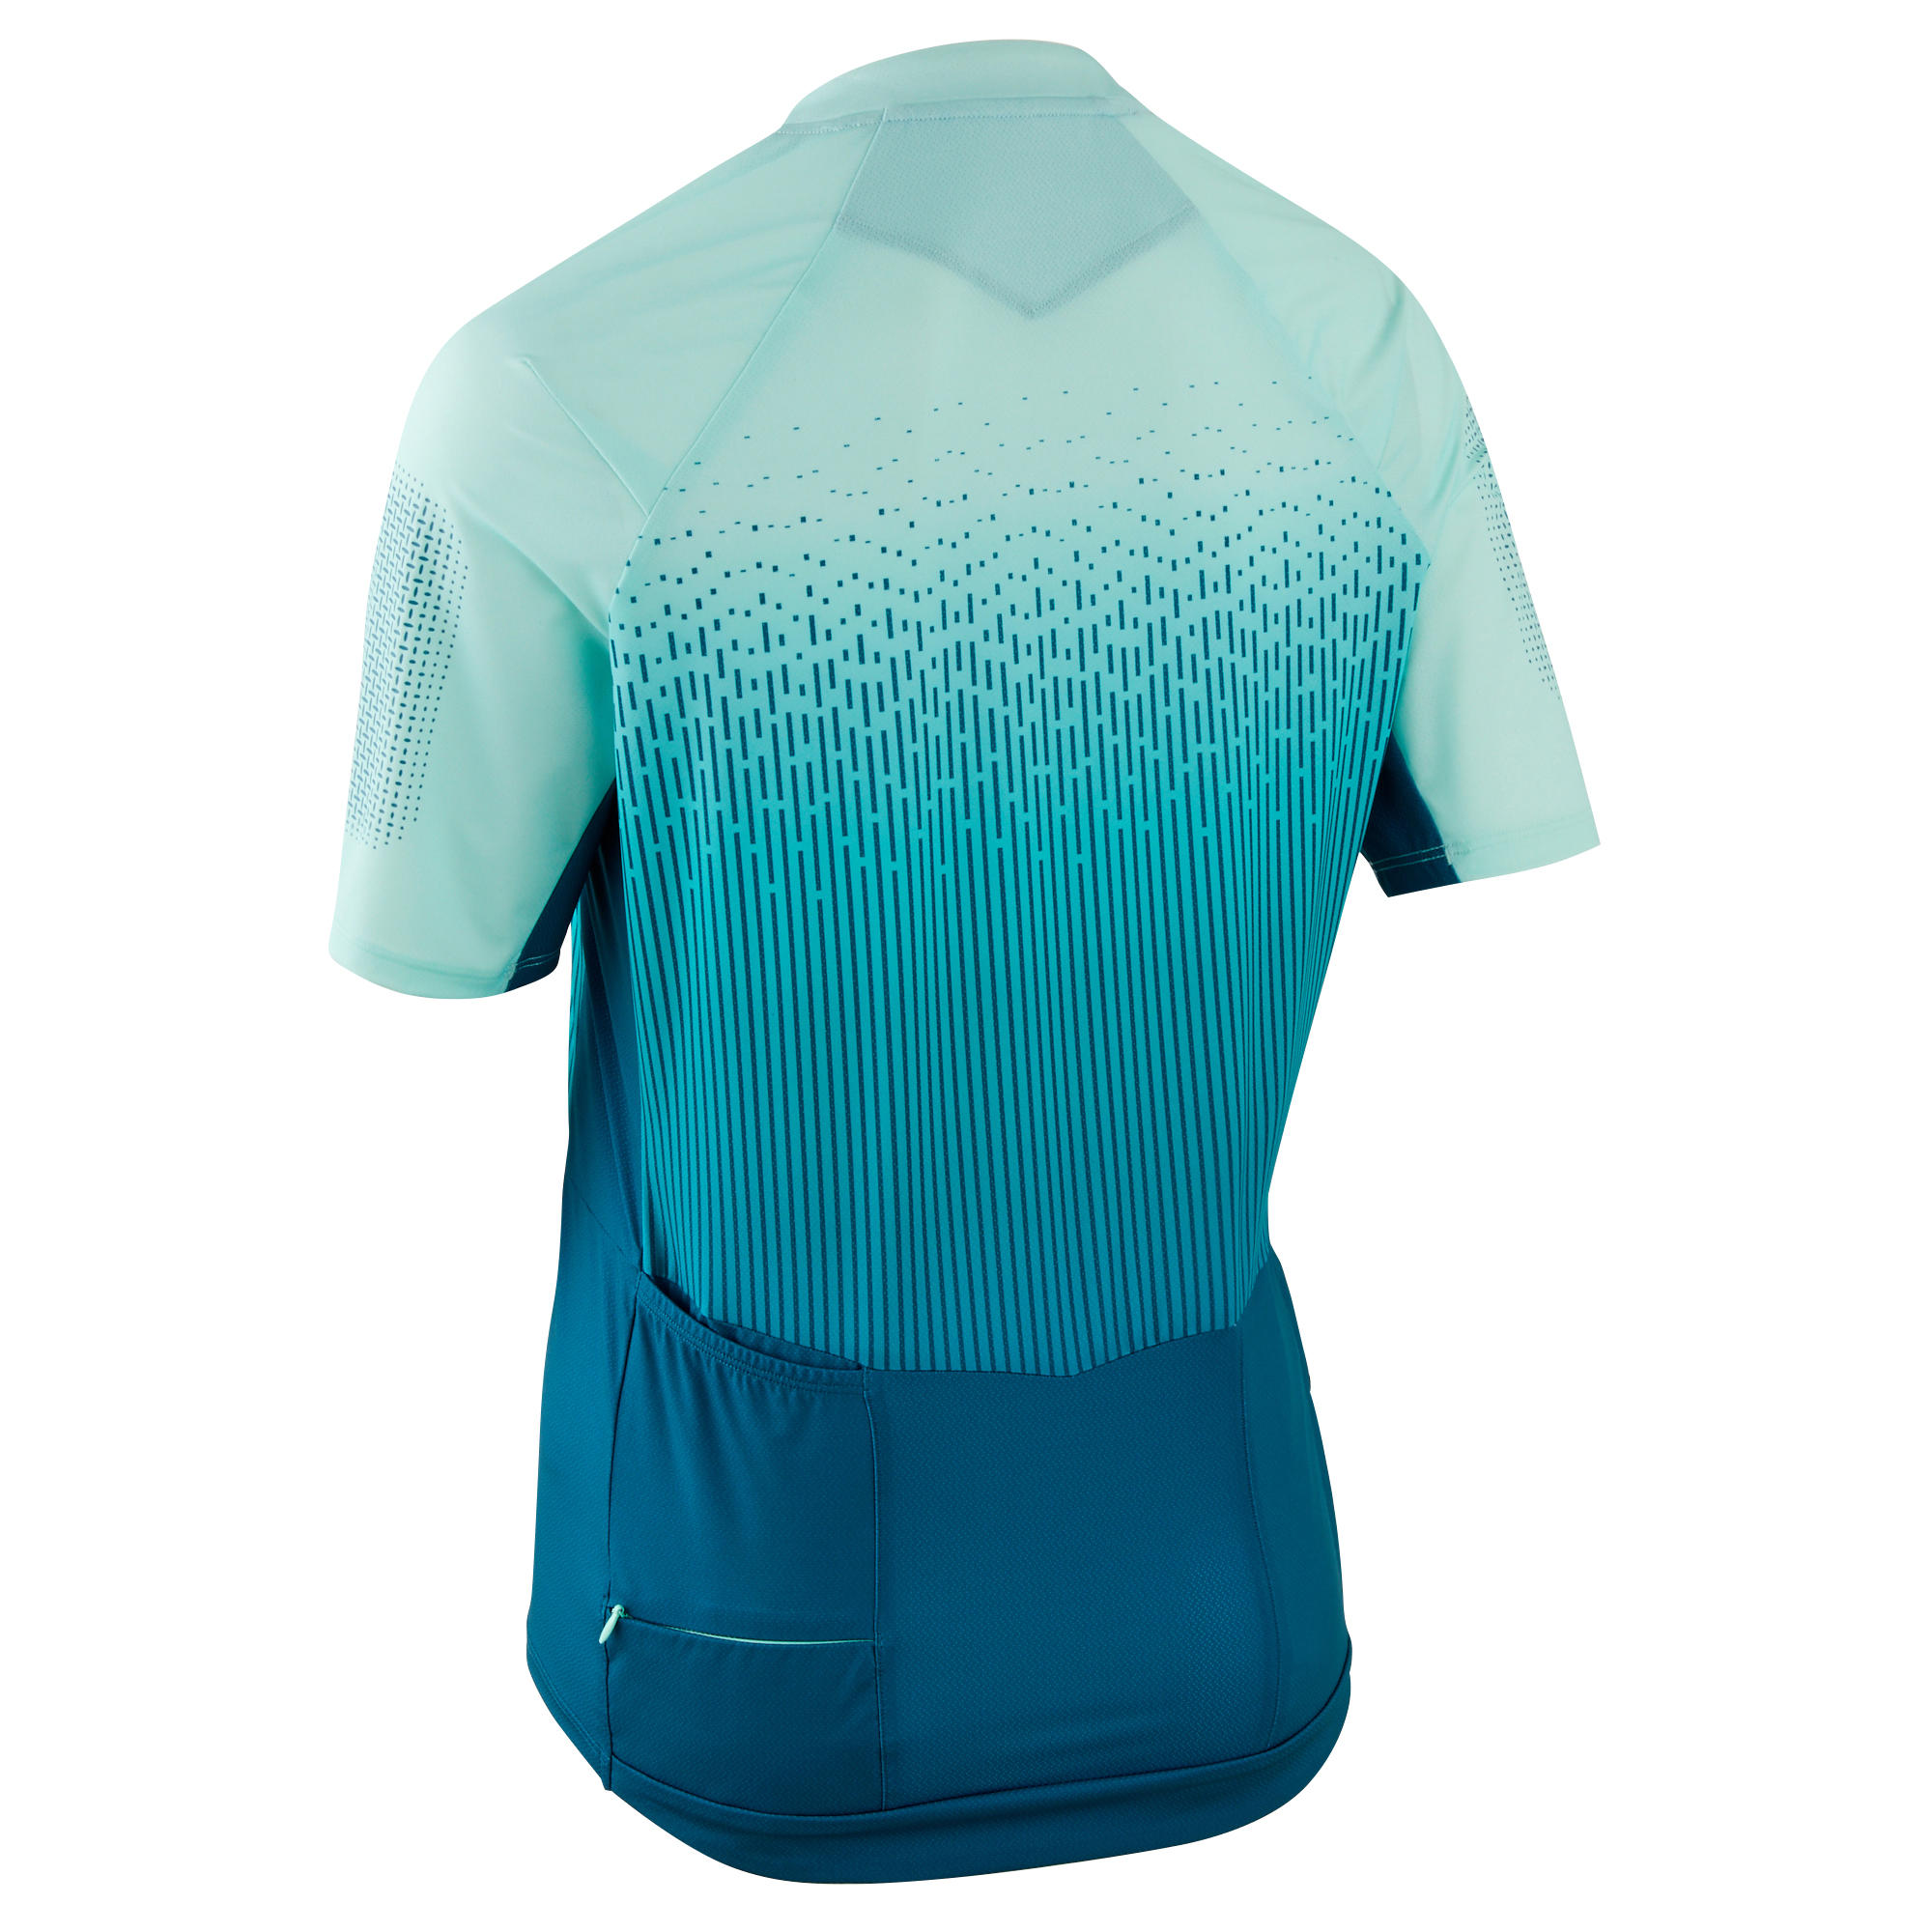 Women's Short-Sleeved Mountain Bike Jersey ST 500 - Turquoise 6/10